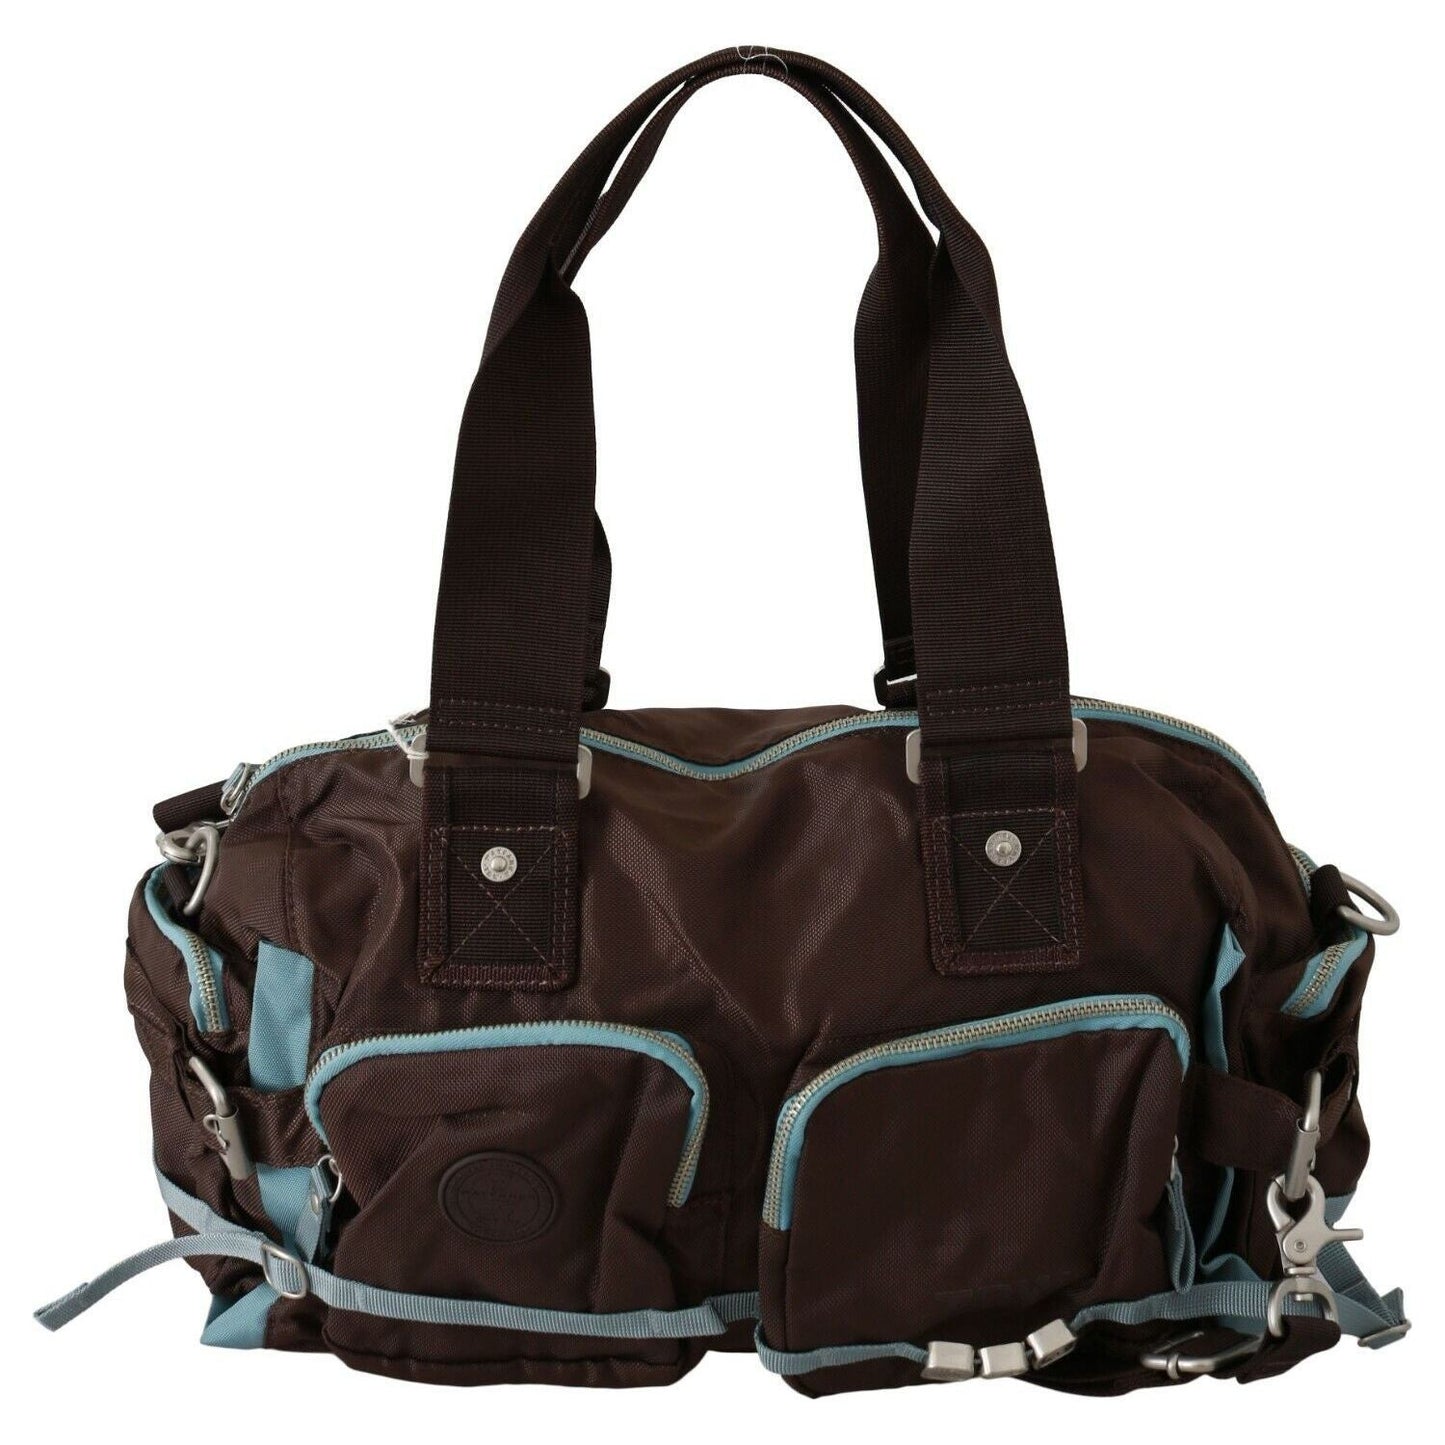 WAYFARER Elegant Duffel Travel Bag in Earthy Brown Luggage brown-handbag-duffel-travel-purse s-l1600-15-1-732e5e16-c05.jpg